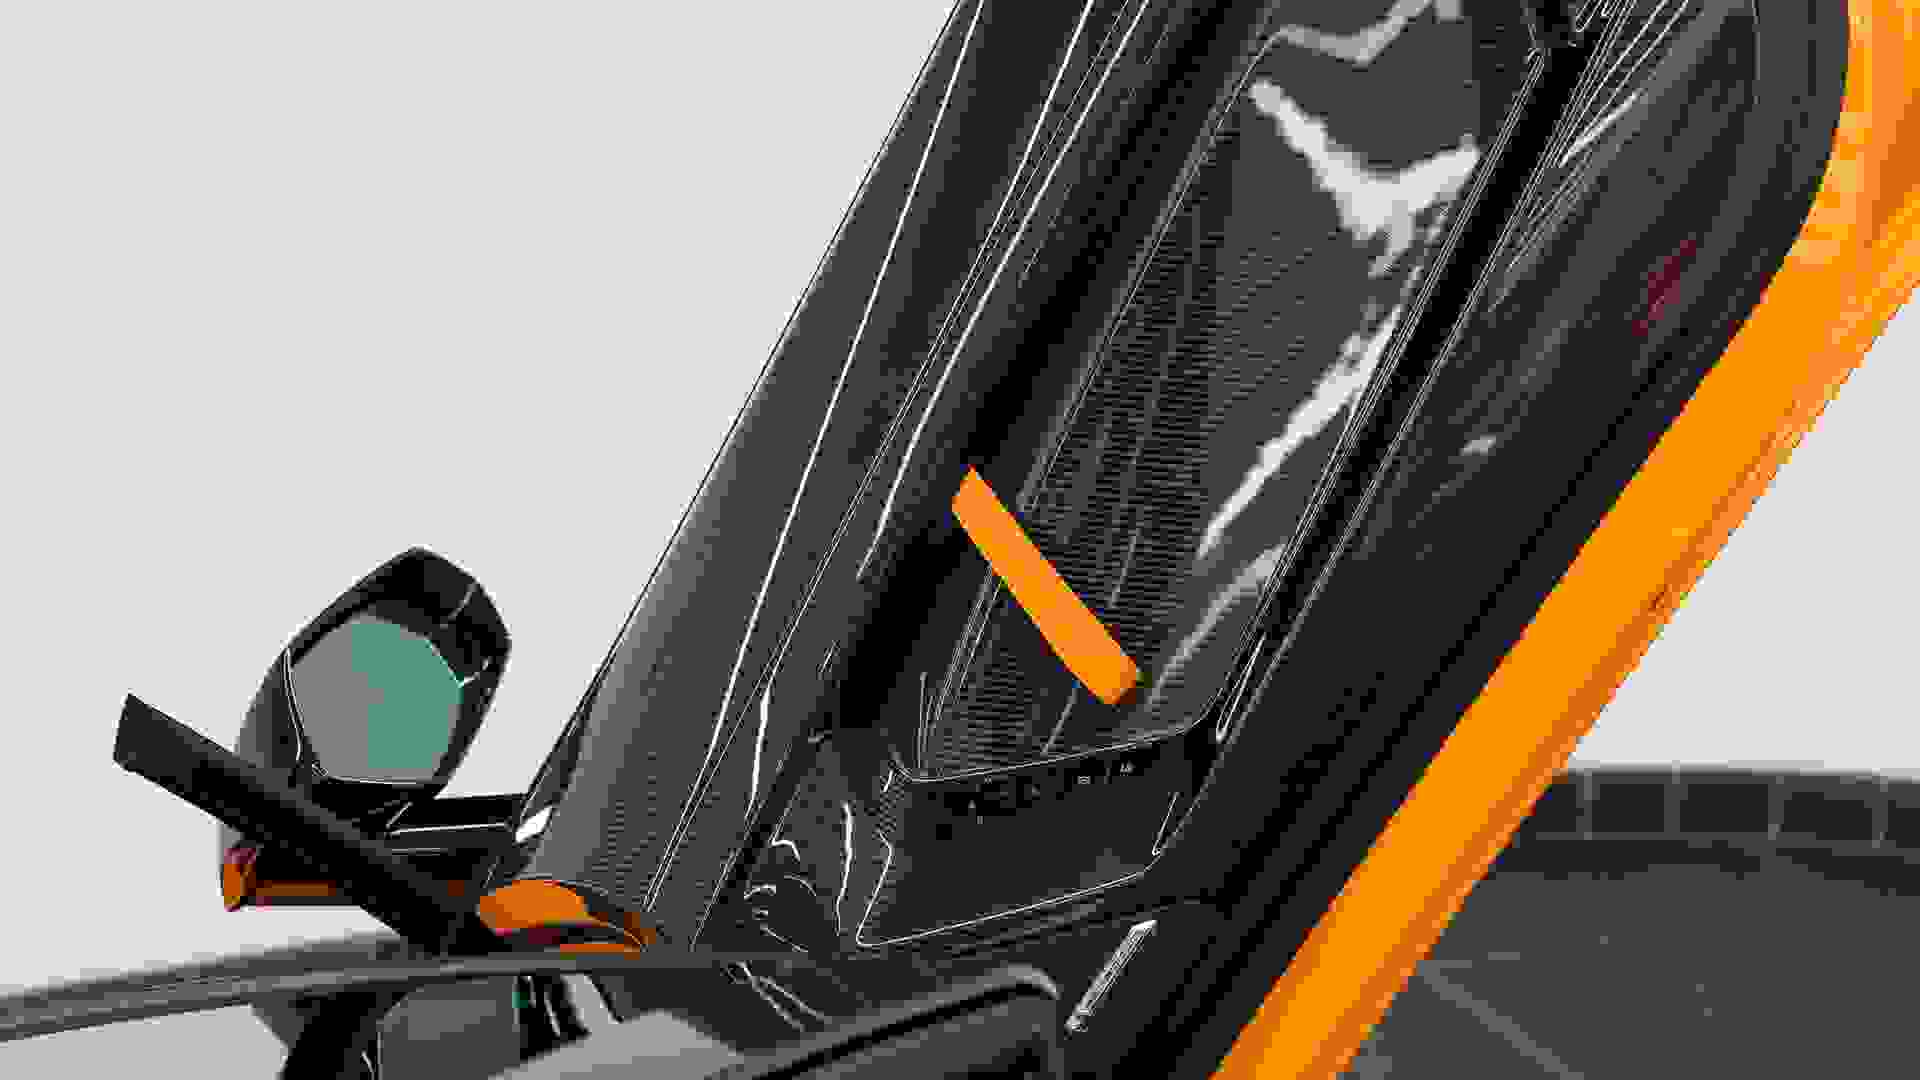 Lamborghini AVENTADOR SV Photo d377c5d7-8201-4ef2-b049-5b01acbfcac5.jpg